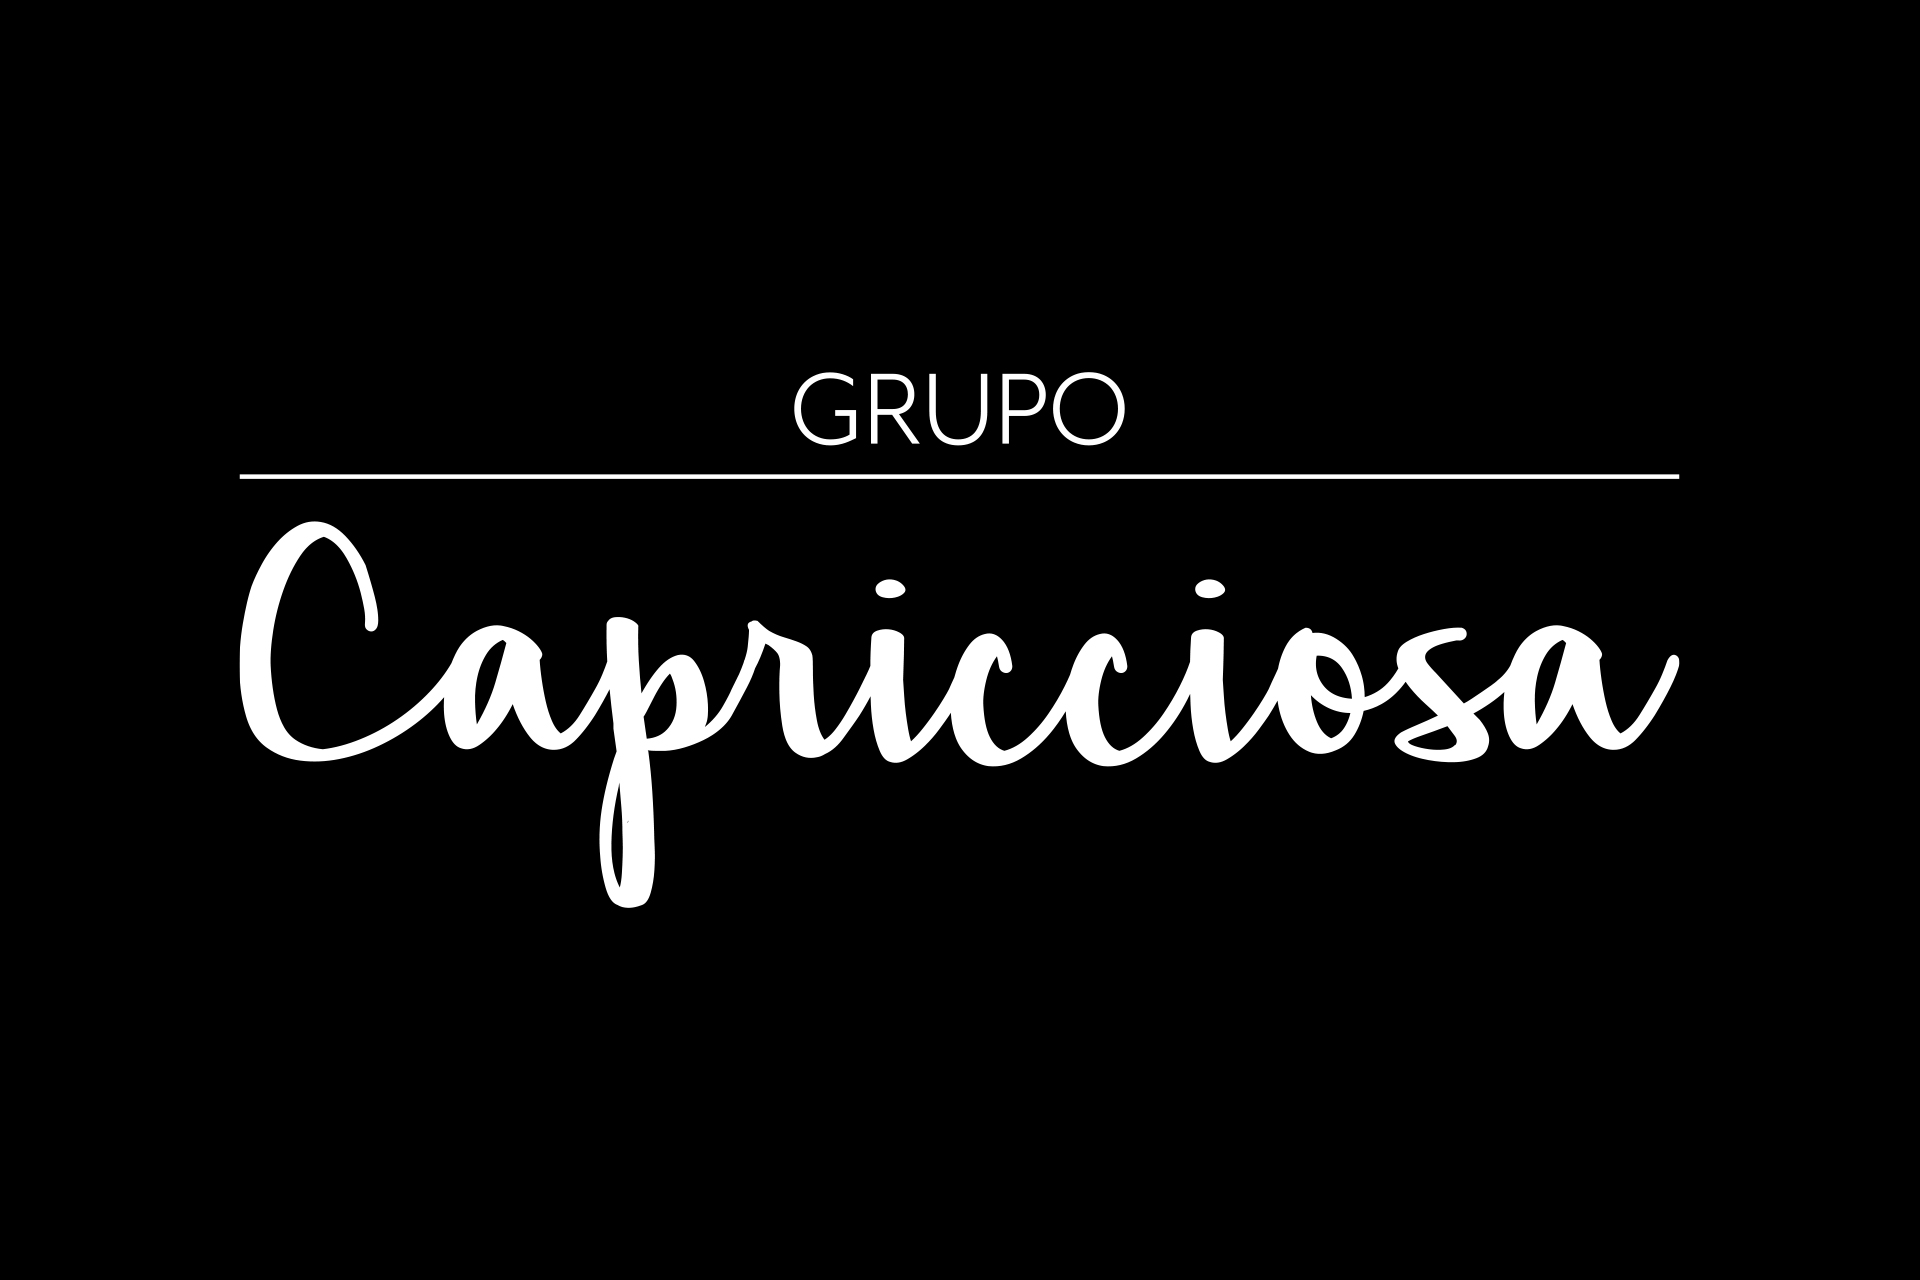 (c) Grupocapricciosa.pt